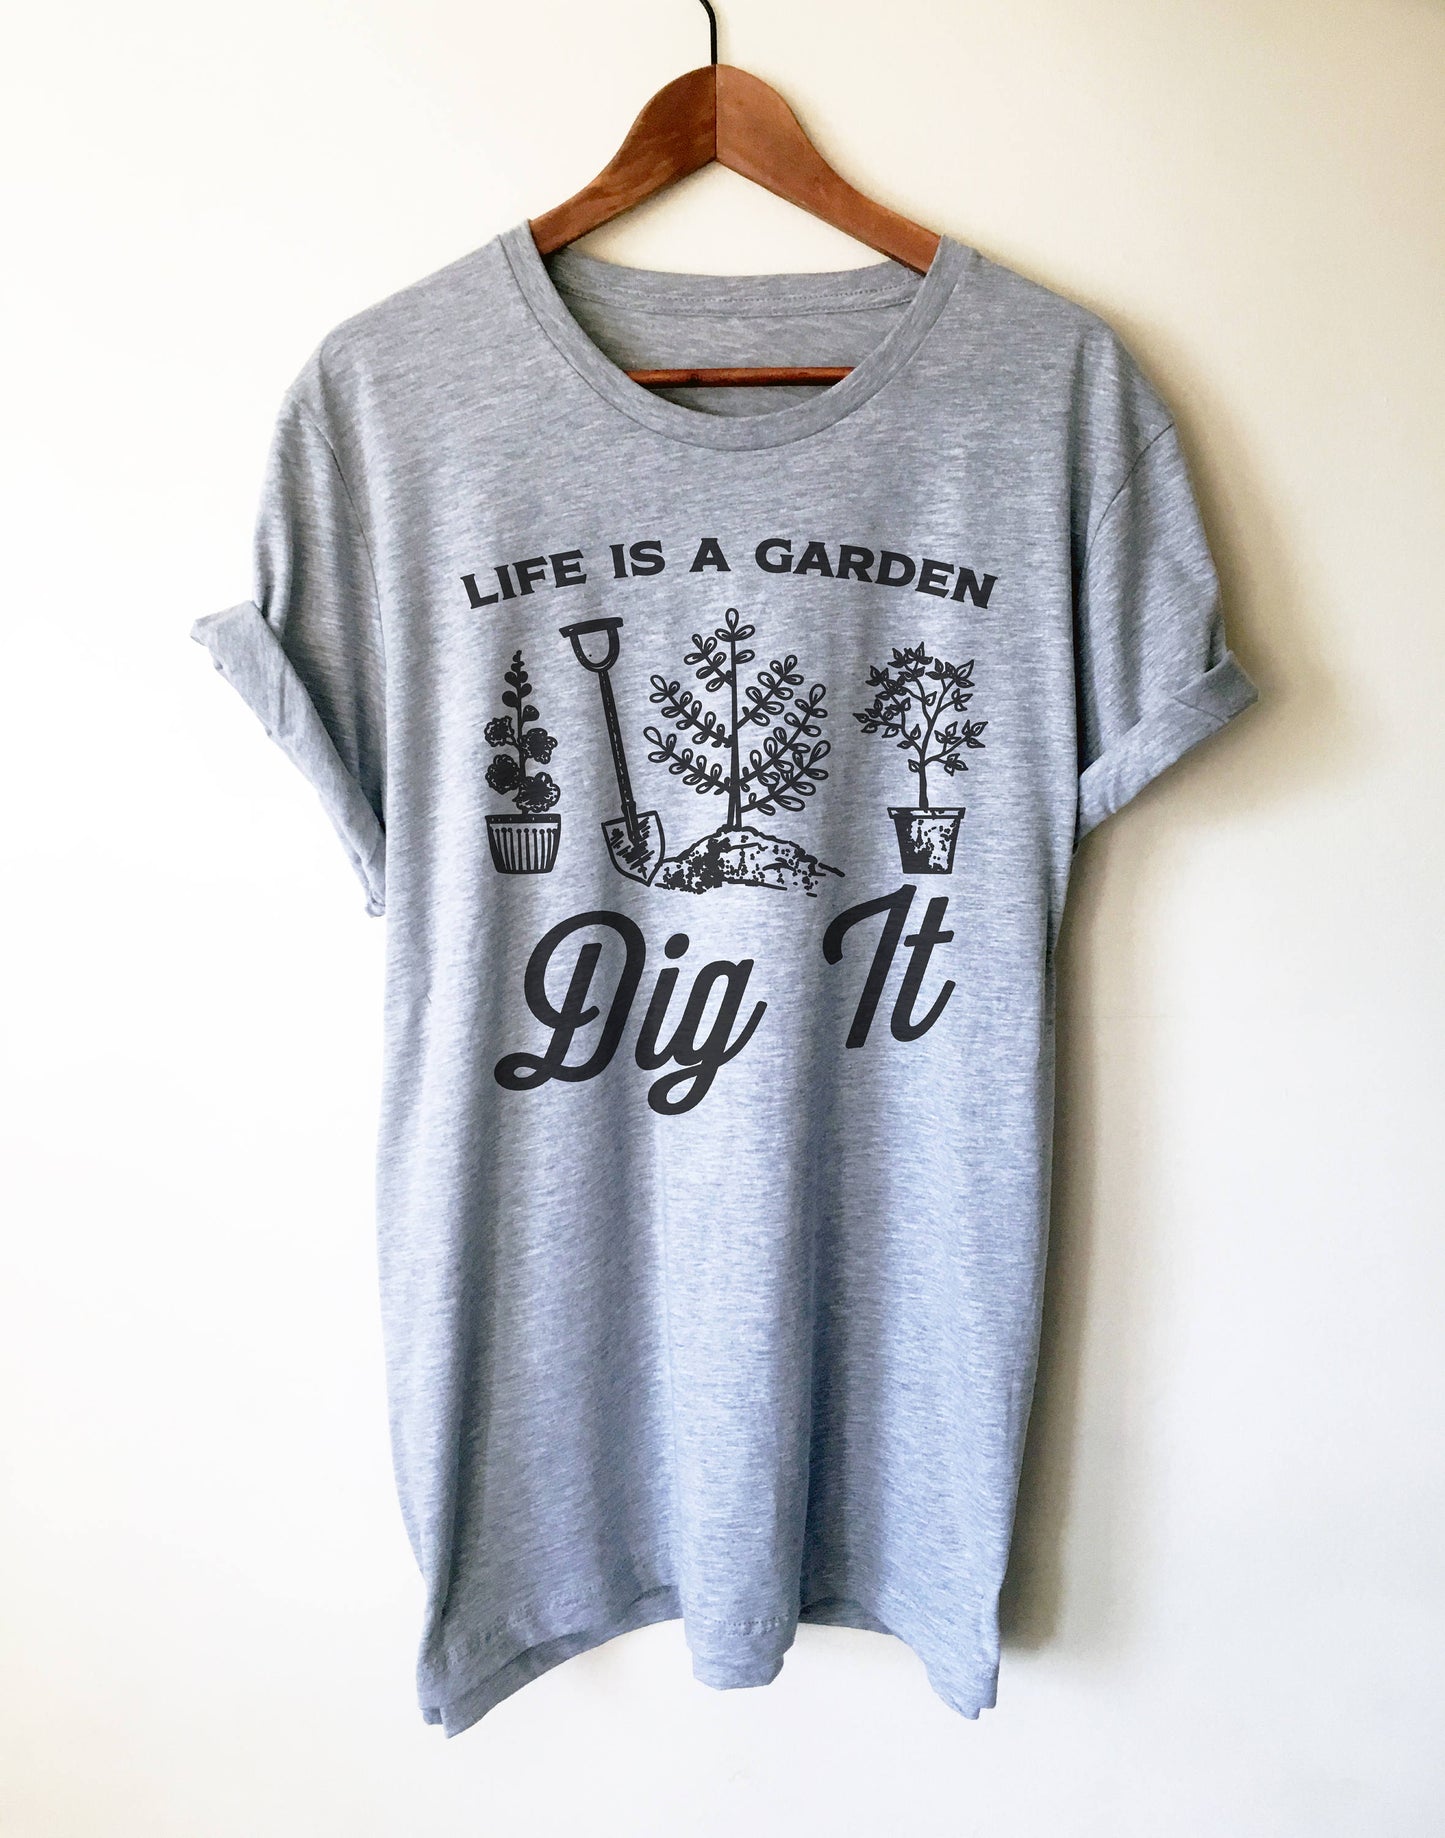 Life Is A Garden Dig It! Unisex Shirt - Gardening Shirt, Gardener Gift, Plant Shirt, Funny Sayings Shirt, Farmer Shirt, Allotment Shirt